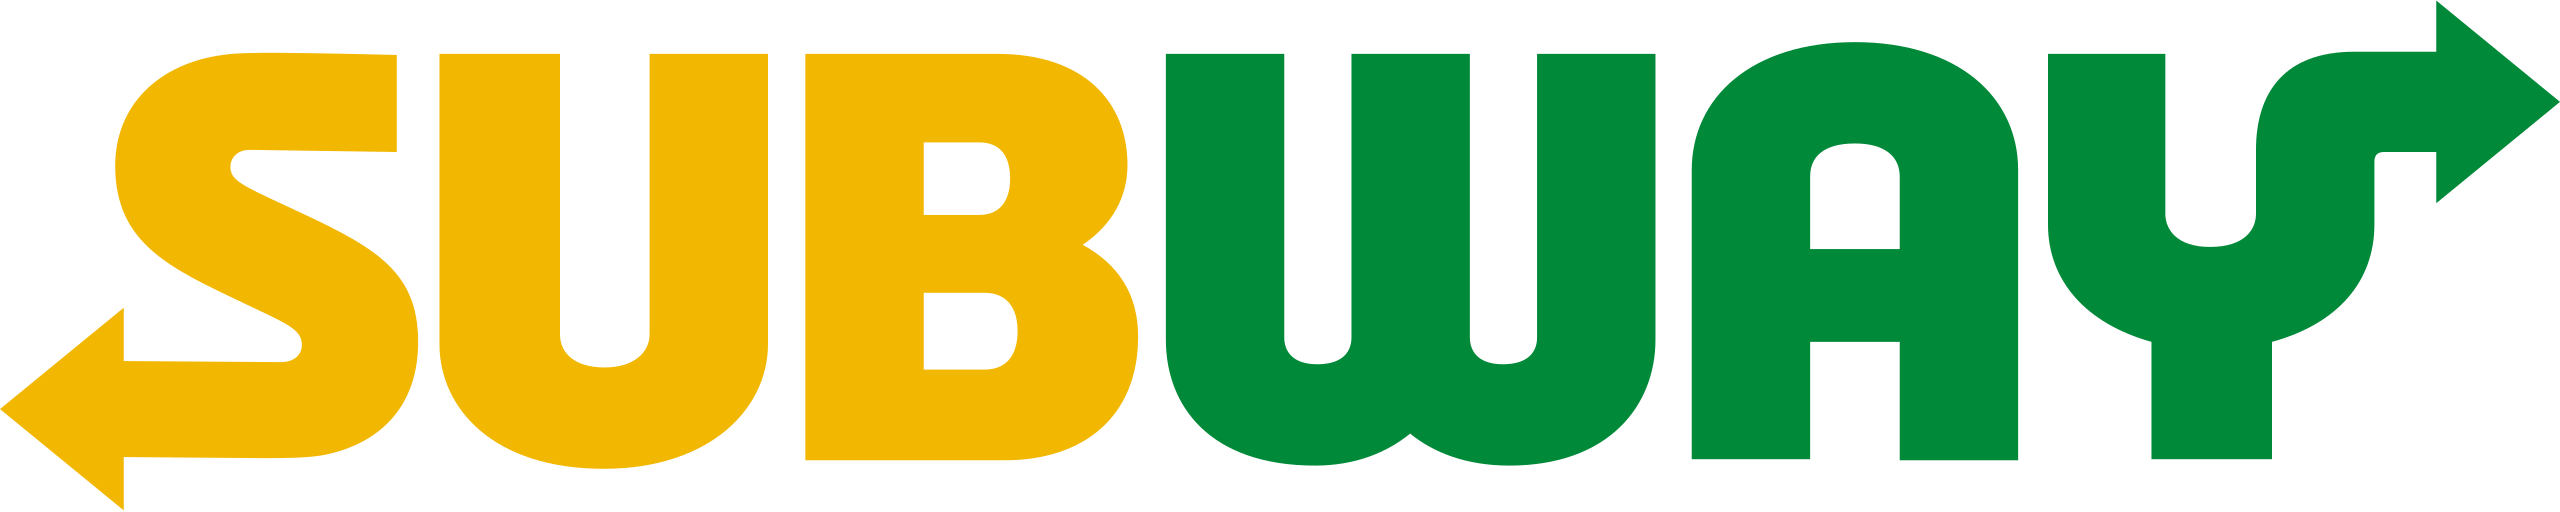 Subway 2016 Logo